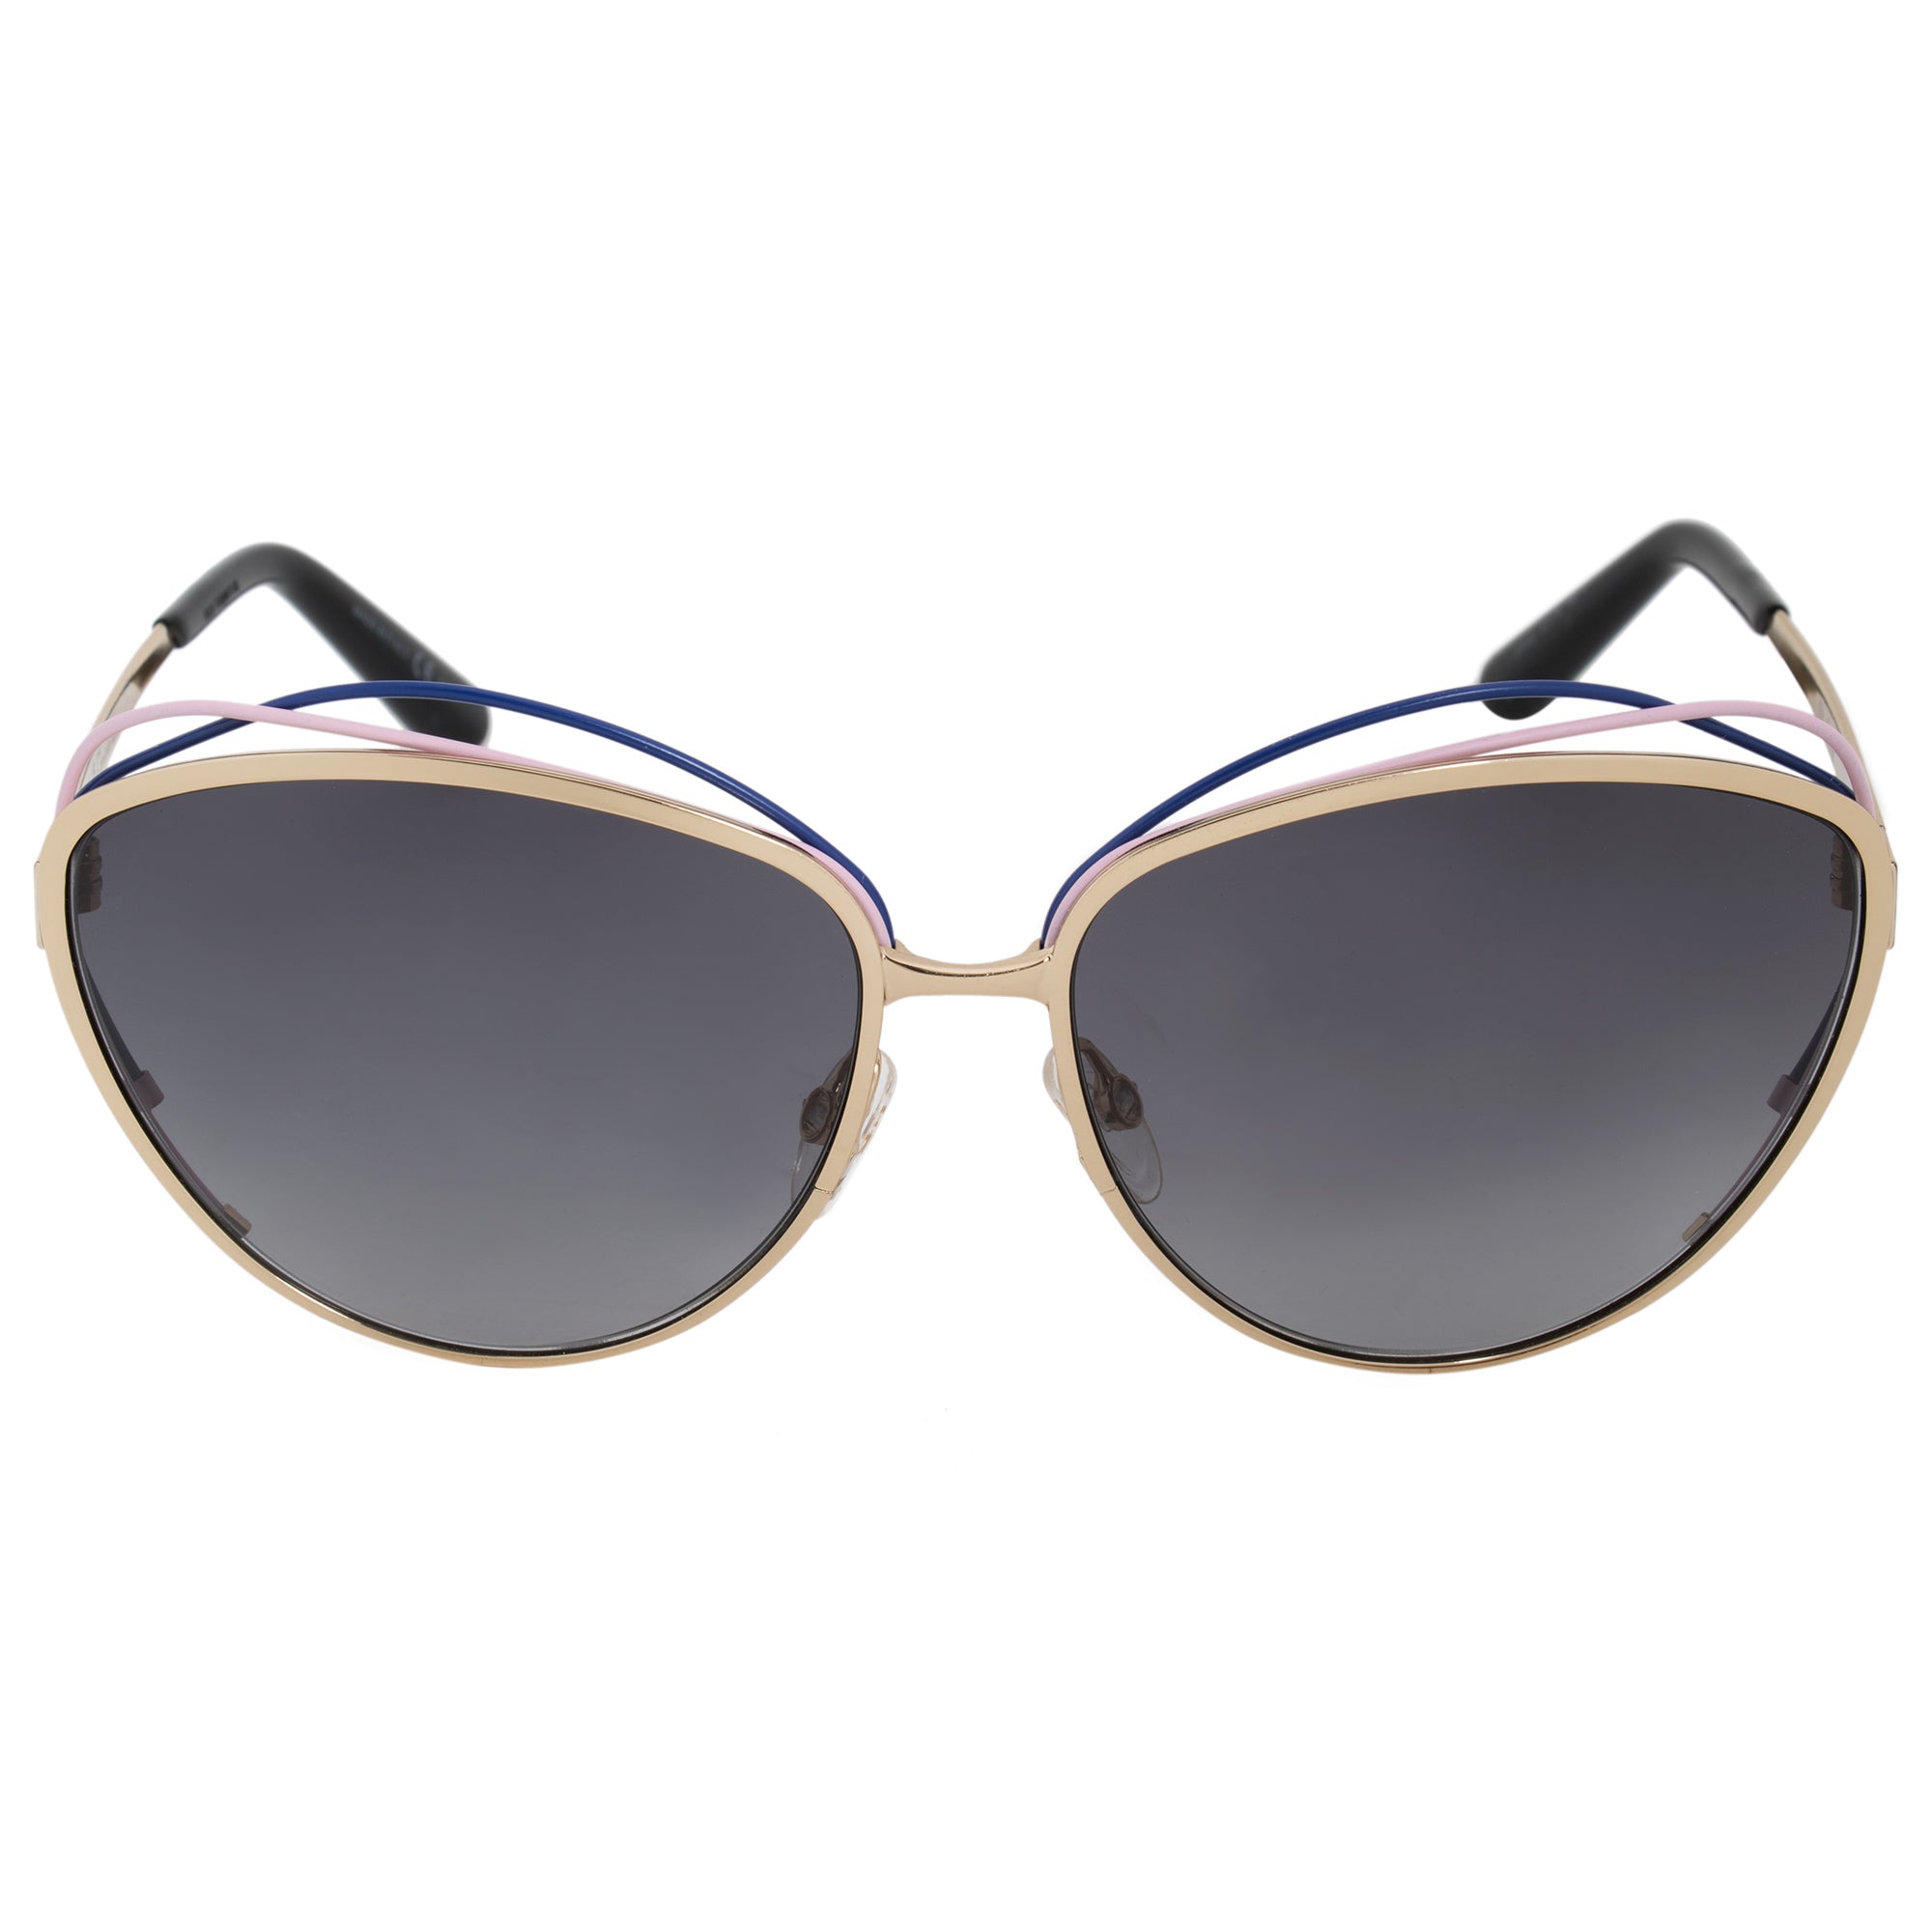 Christian Dior Songe JPFHD Sunglasses 